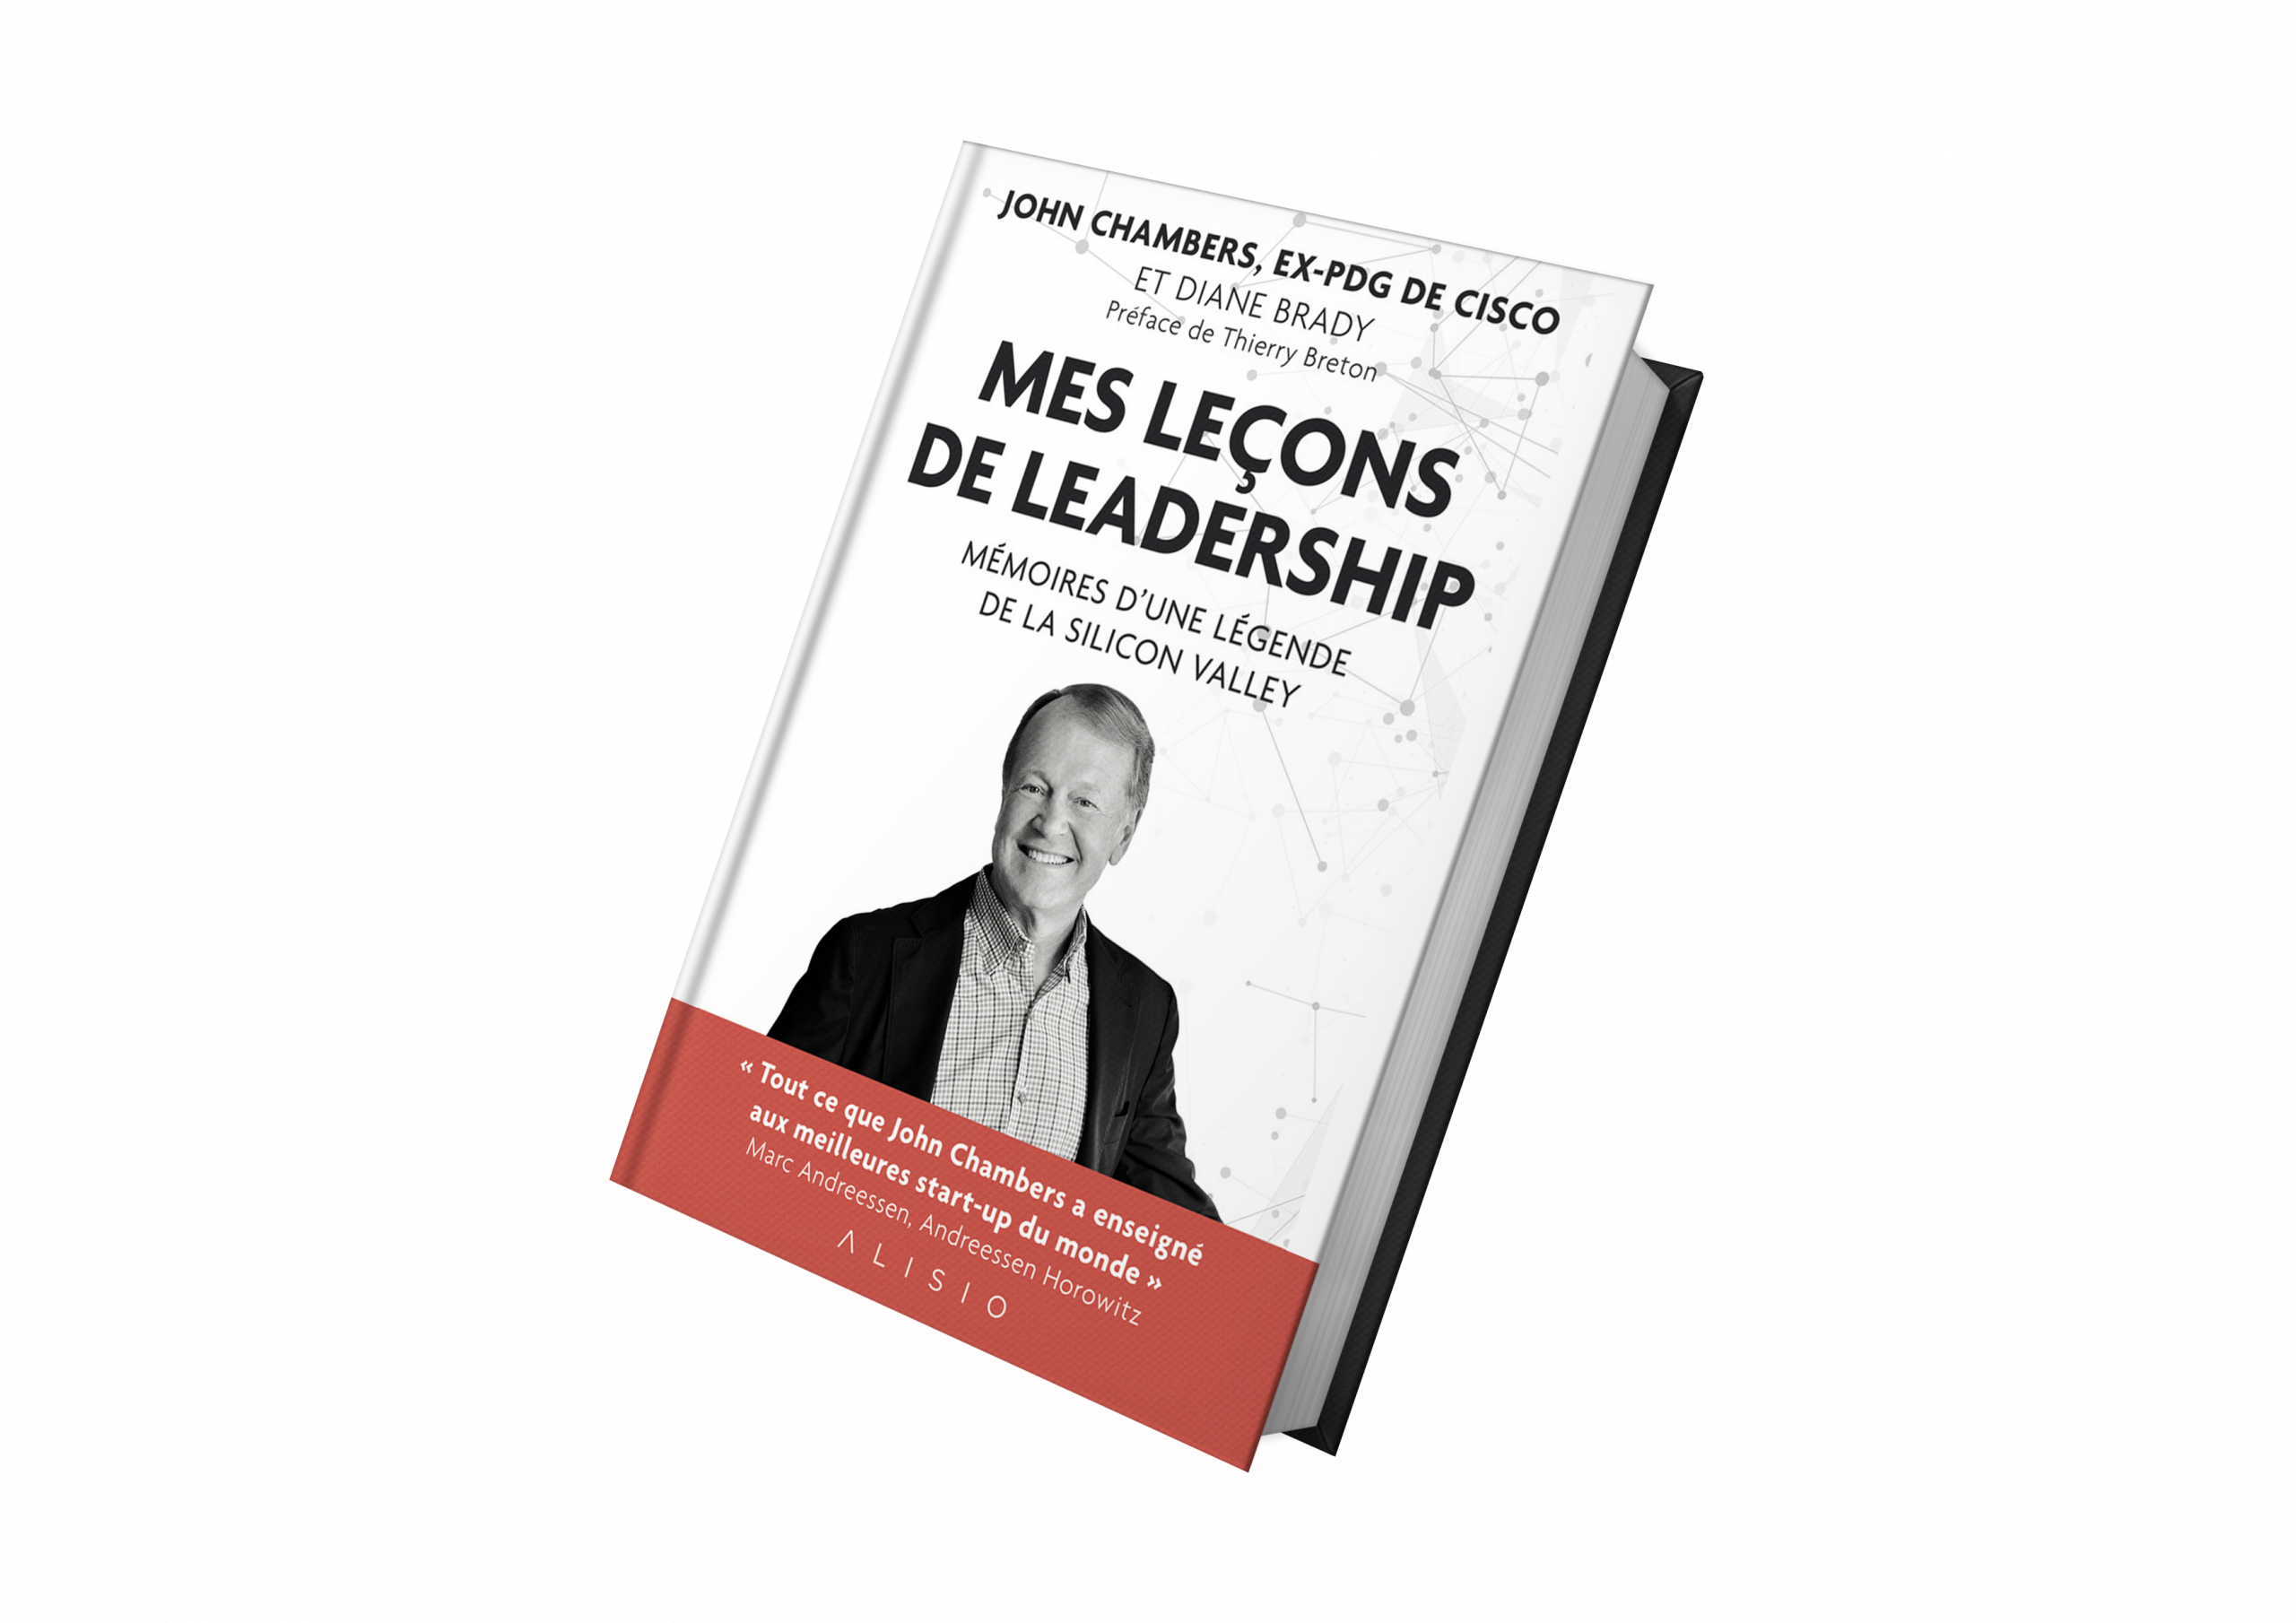 John Chambers Mes leçons de leaderhip